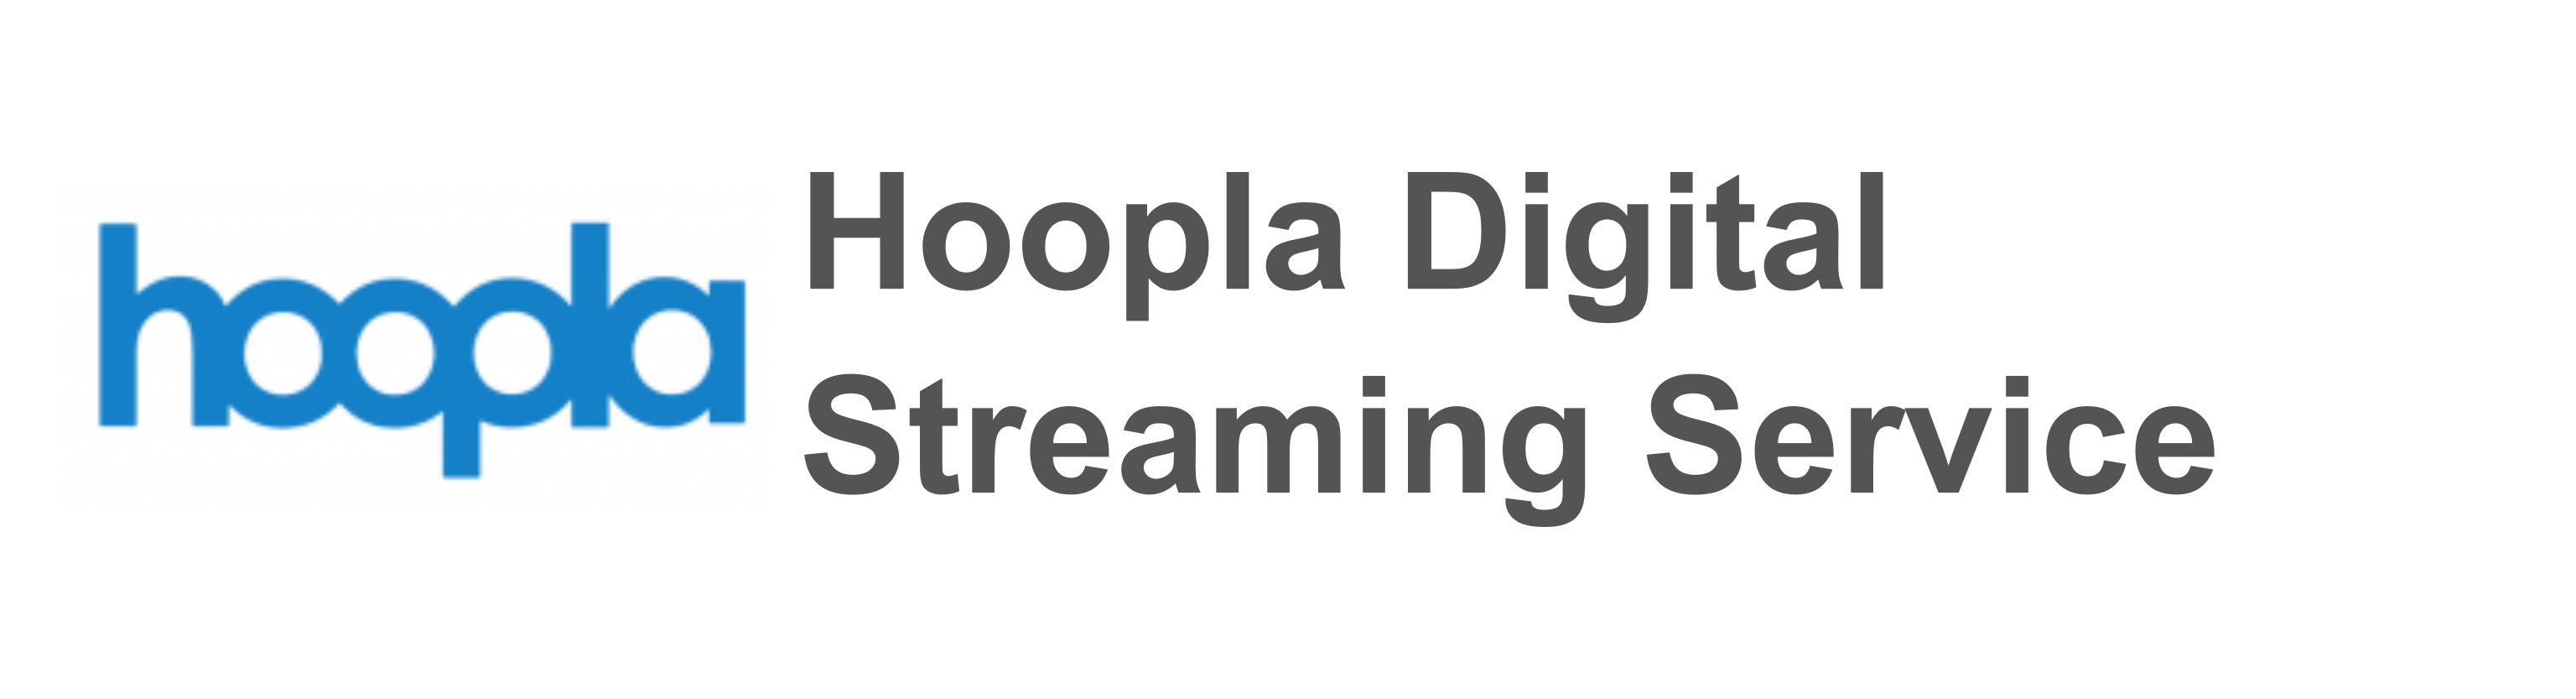 Hoopla Digital Streaming Service